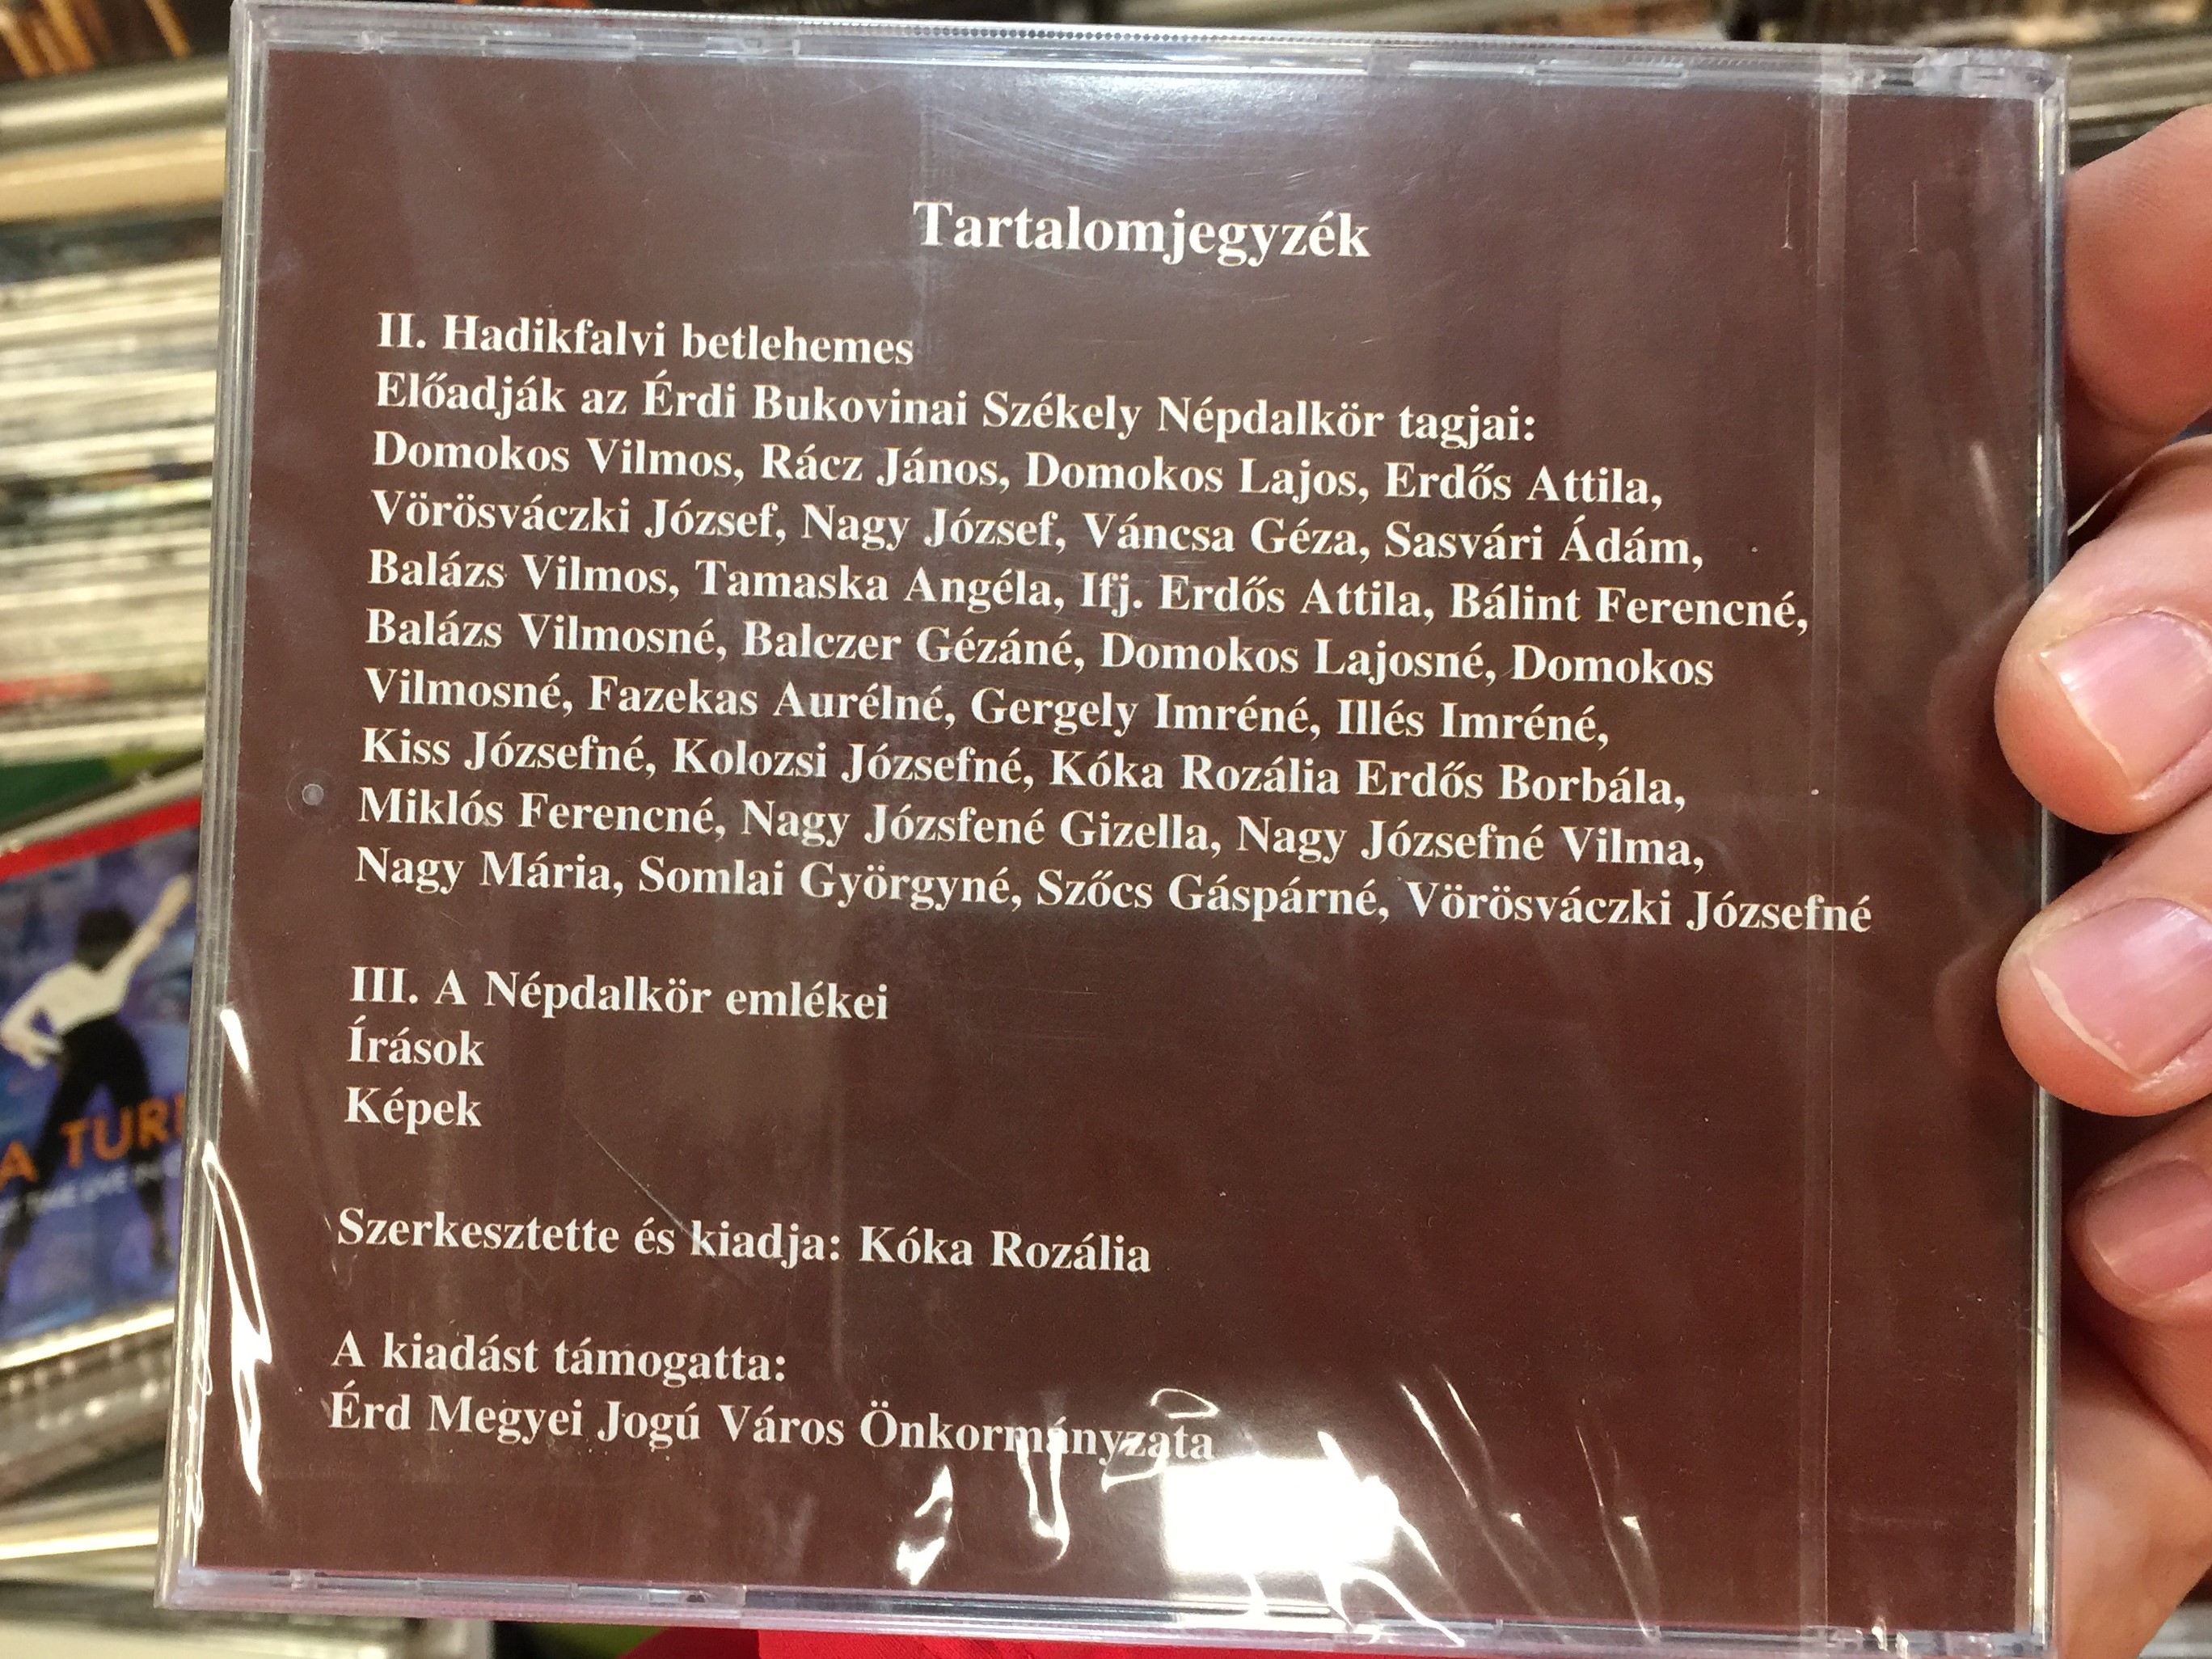 rdi-bukovinai-sz-kely-n-pdalk-r-1971-2008.-not-on-label-rdi-bukovinai-sz-kely-n-pdalk-r-self-released-audio-cd-2008-bnk-71-2-.jpg